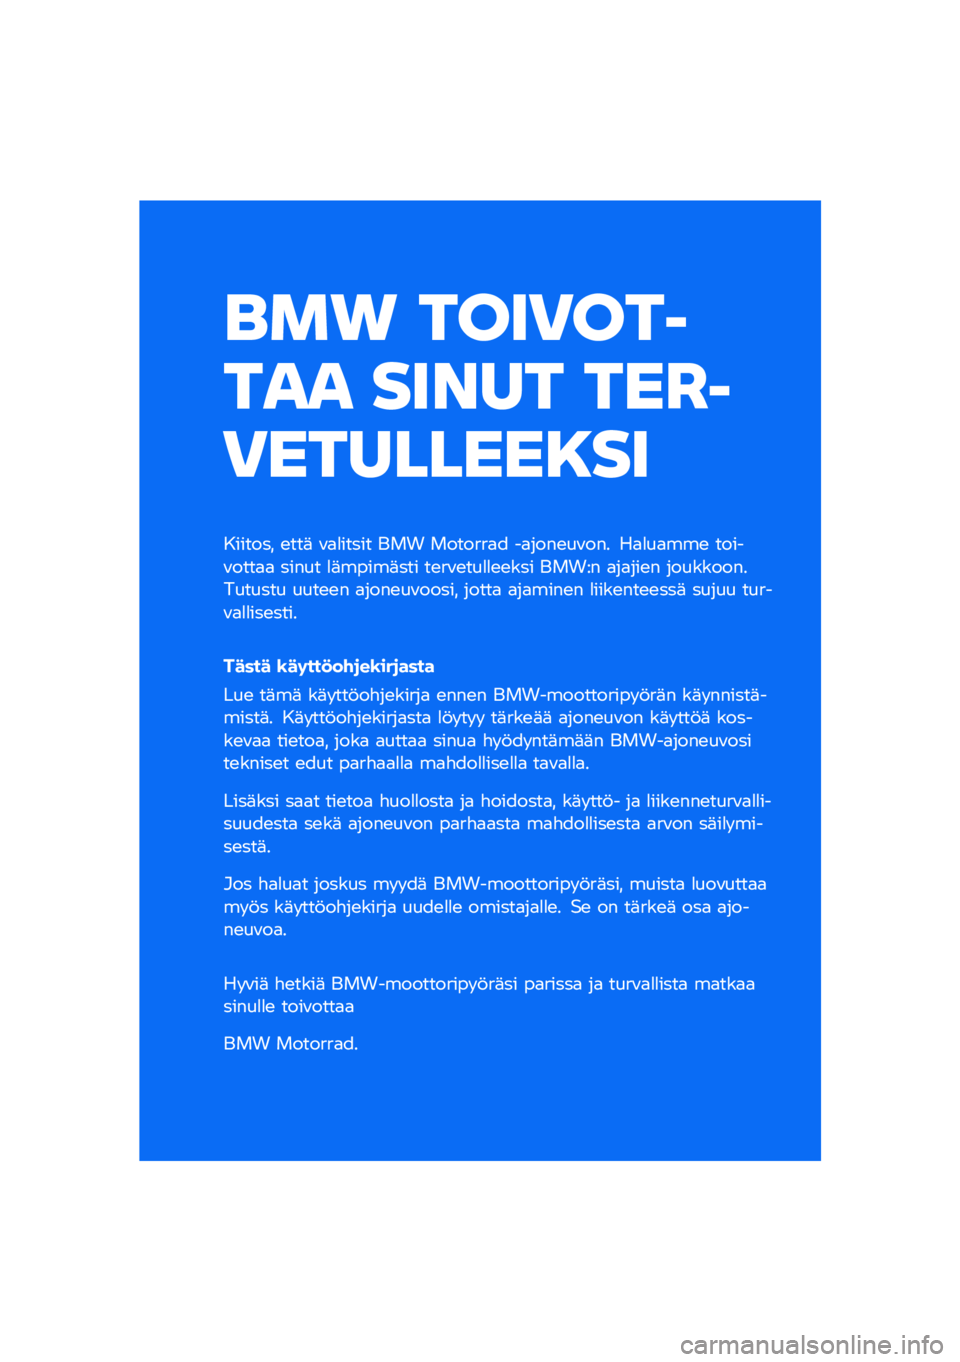 BMW MOTORRAD F 900 R 2020  Käsikirja (in Finnish) ��� ����\b���	
��
�
 ���\f�
� ����	
�\b���
�������
������� �\b���	 �\f�
�
����� ��� �������
� ��
����\b��\f��� ��
�
��
���\b �����\f��